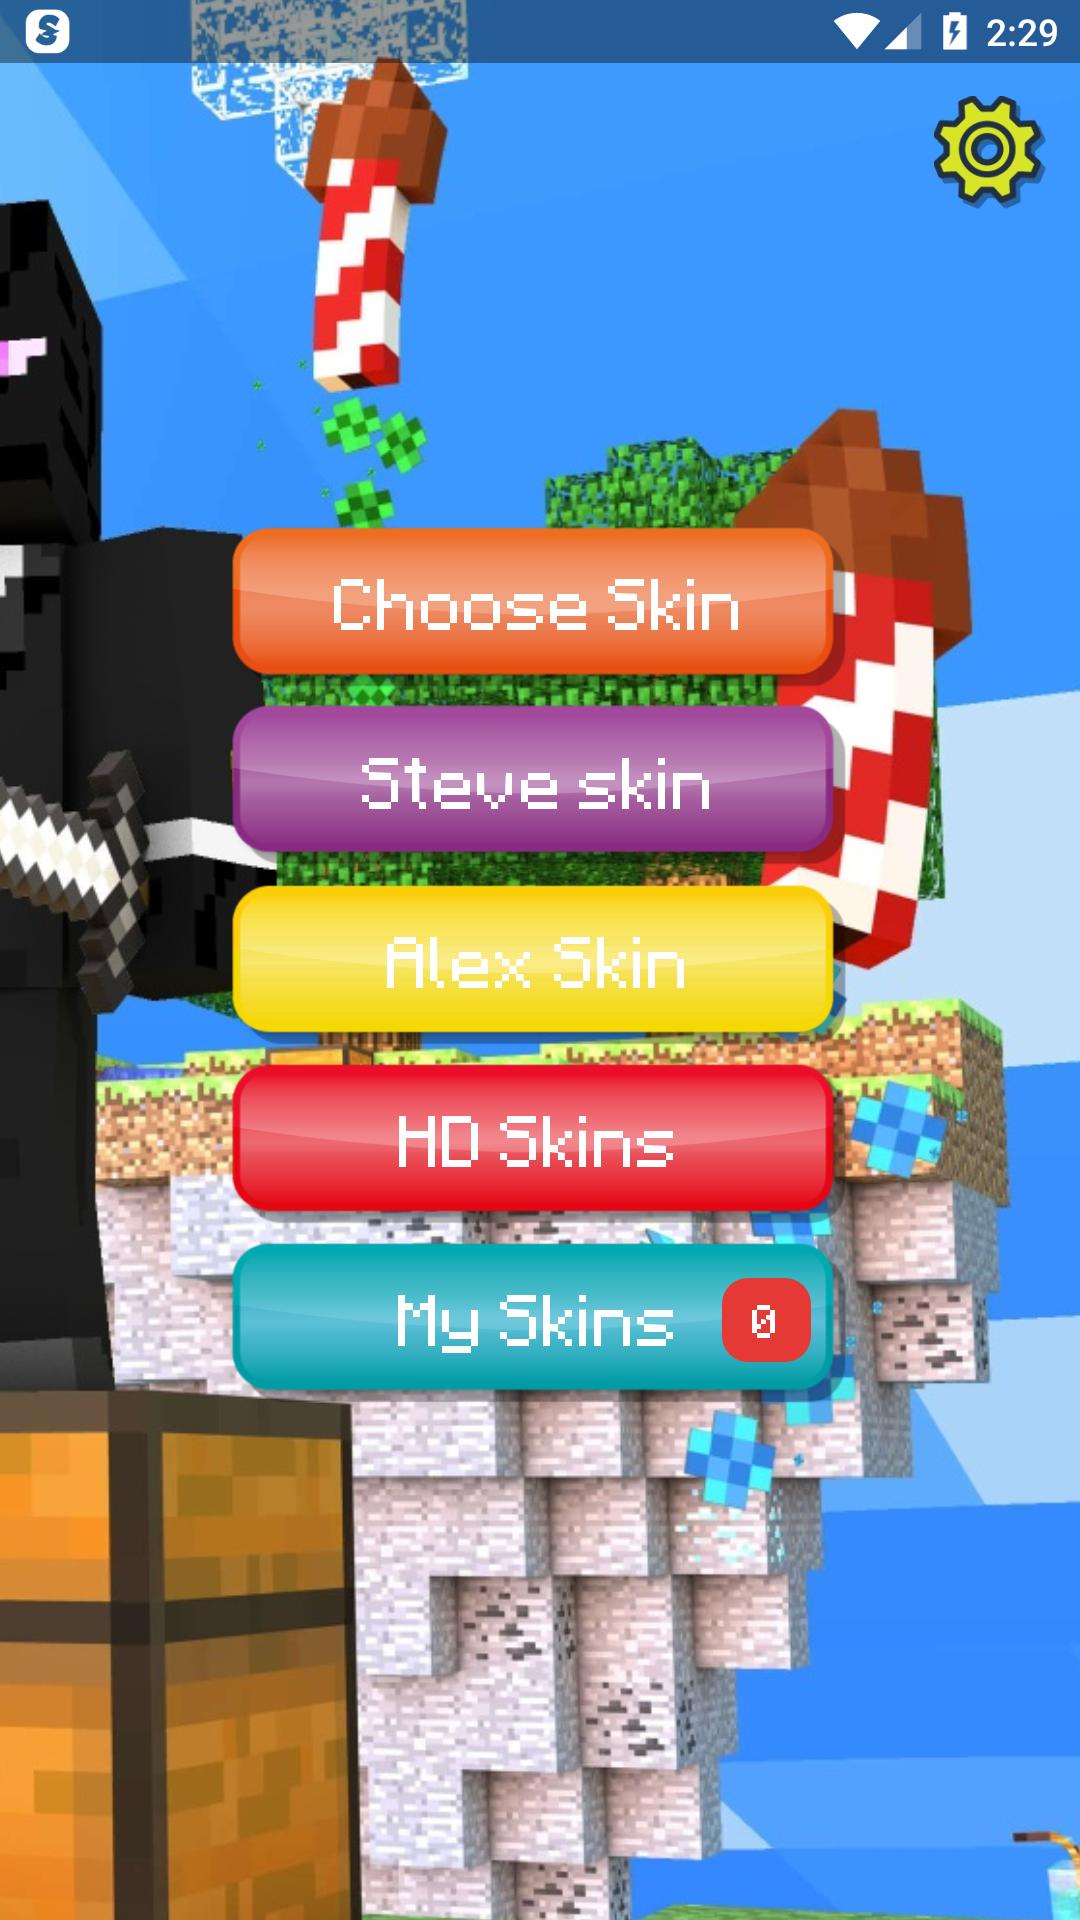 Android 用の Hd Skins Editor For Minecraft Pe 128x128 Apk をダウンロード